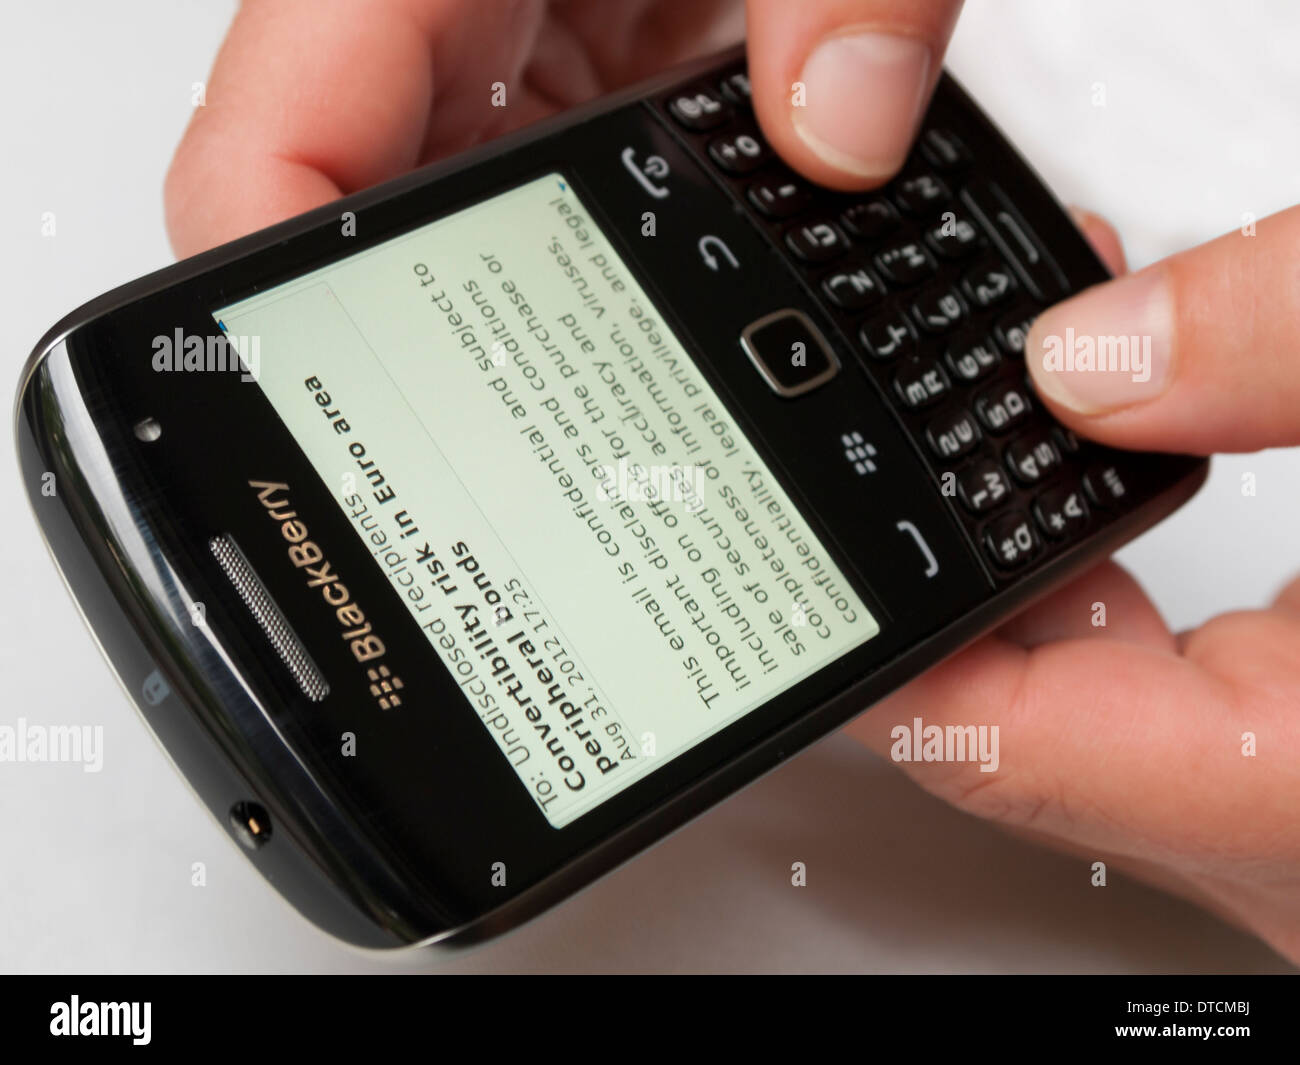 Fingers typing on RIM Blackberry handheld smartphone Stock Photo